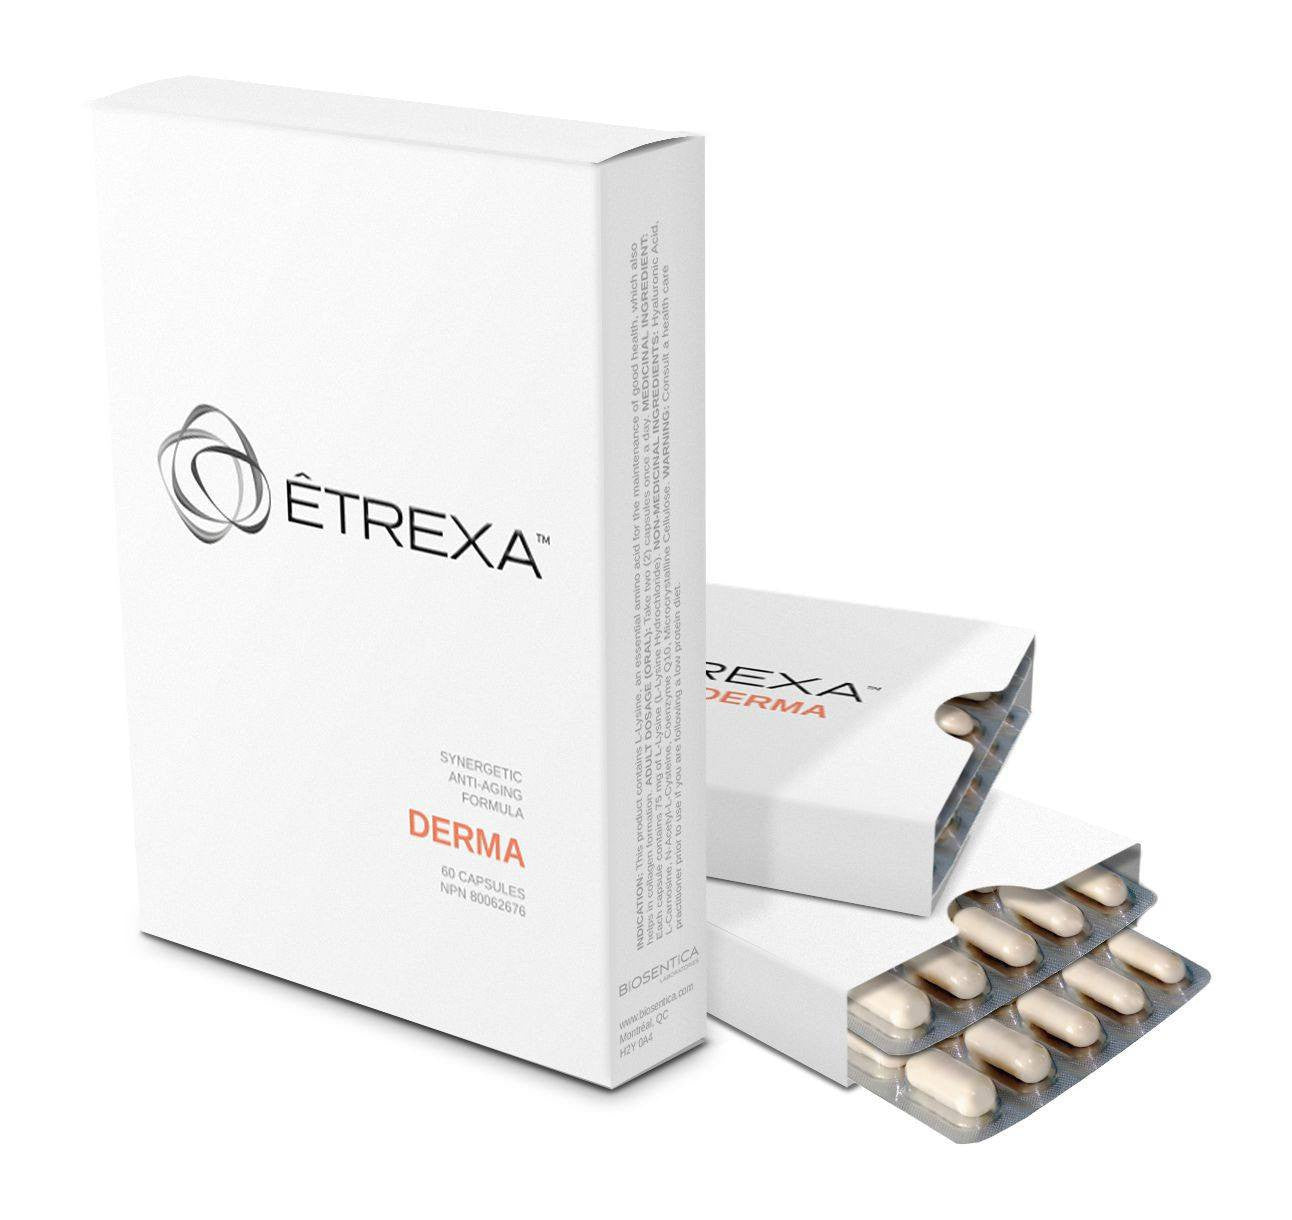 ETREXA DERMA: Optimal Skin Nutrition